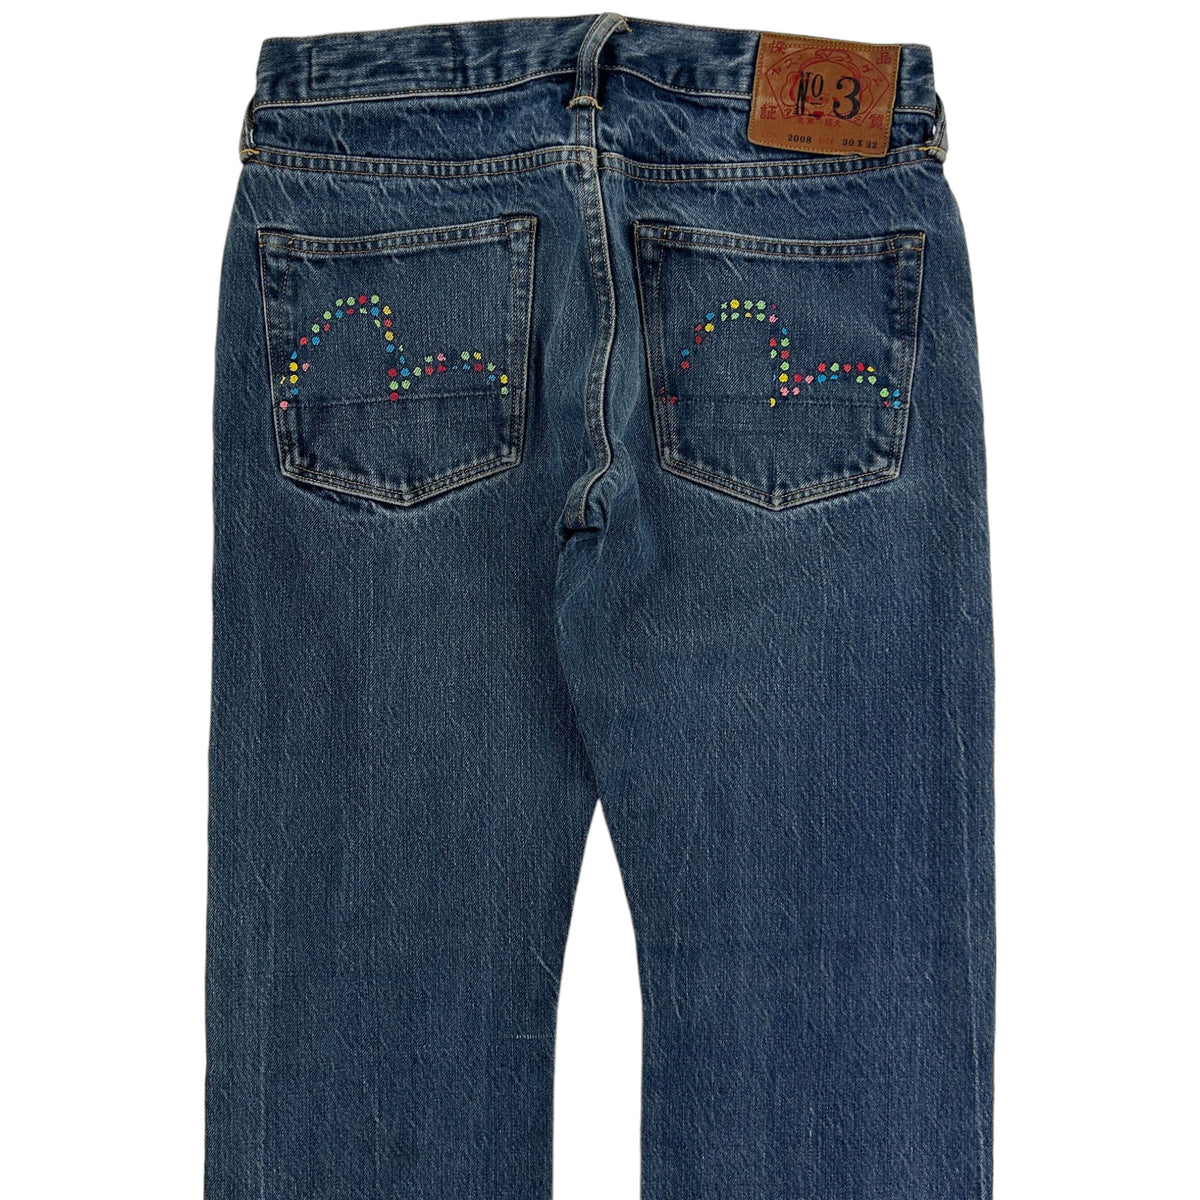 Vintage Evisu Dot Double Gull Japanese Denim Jeans Size W30